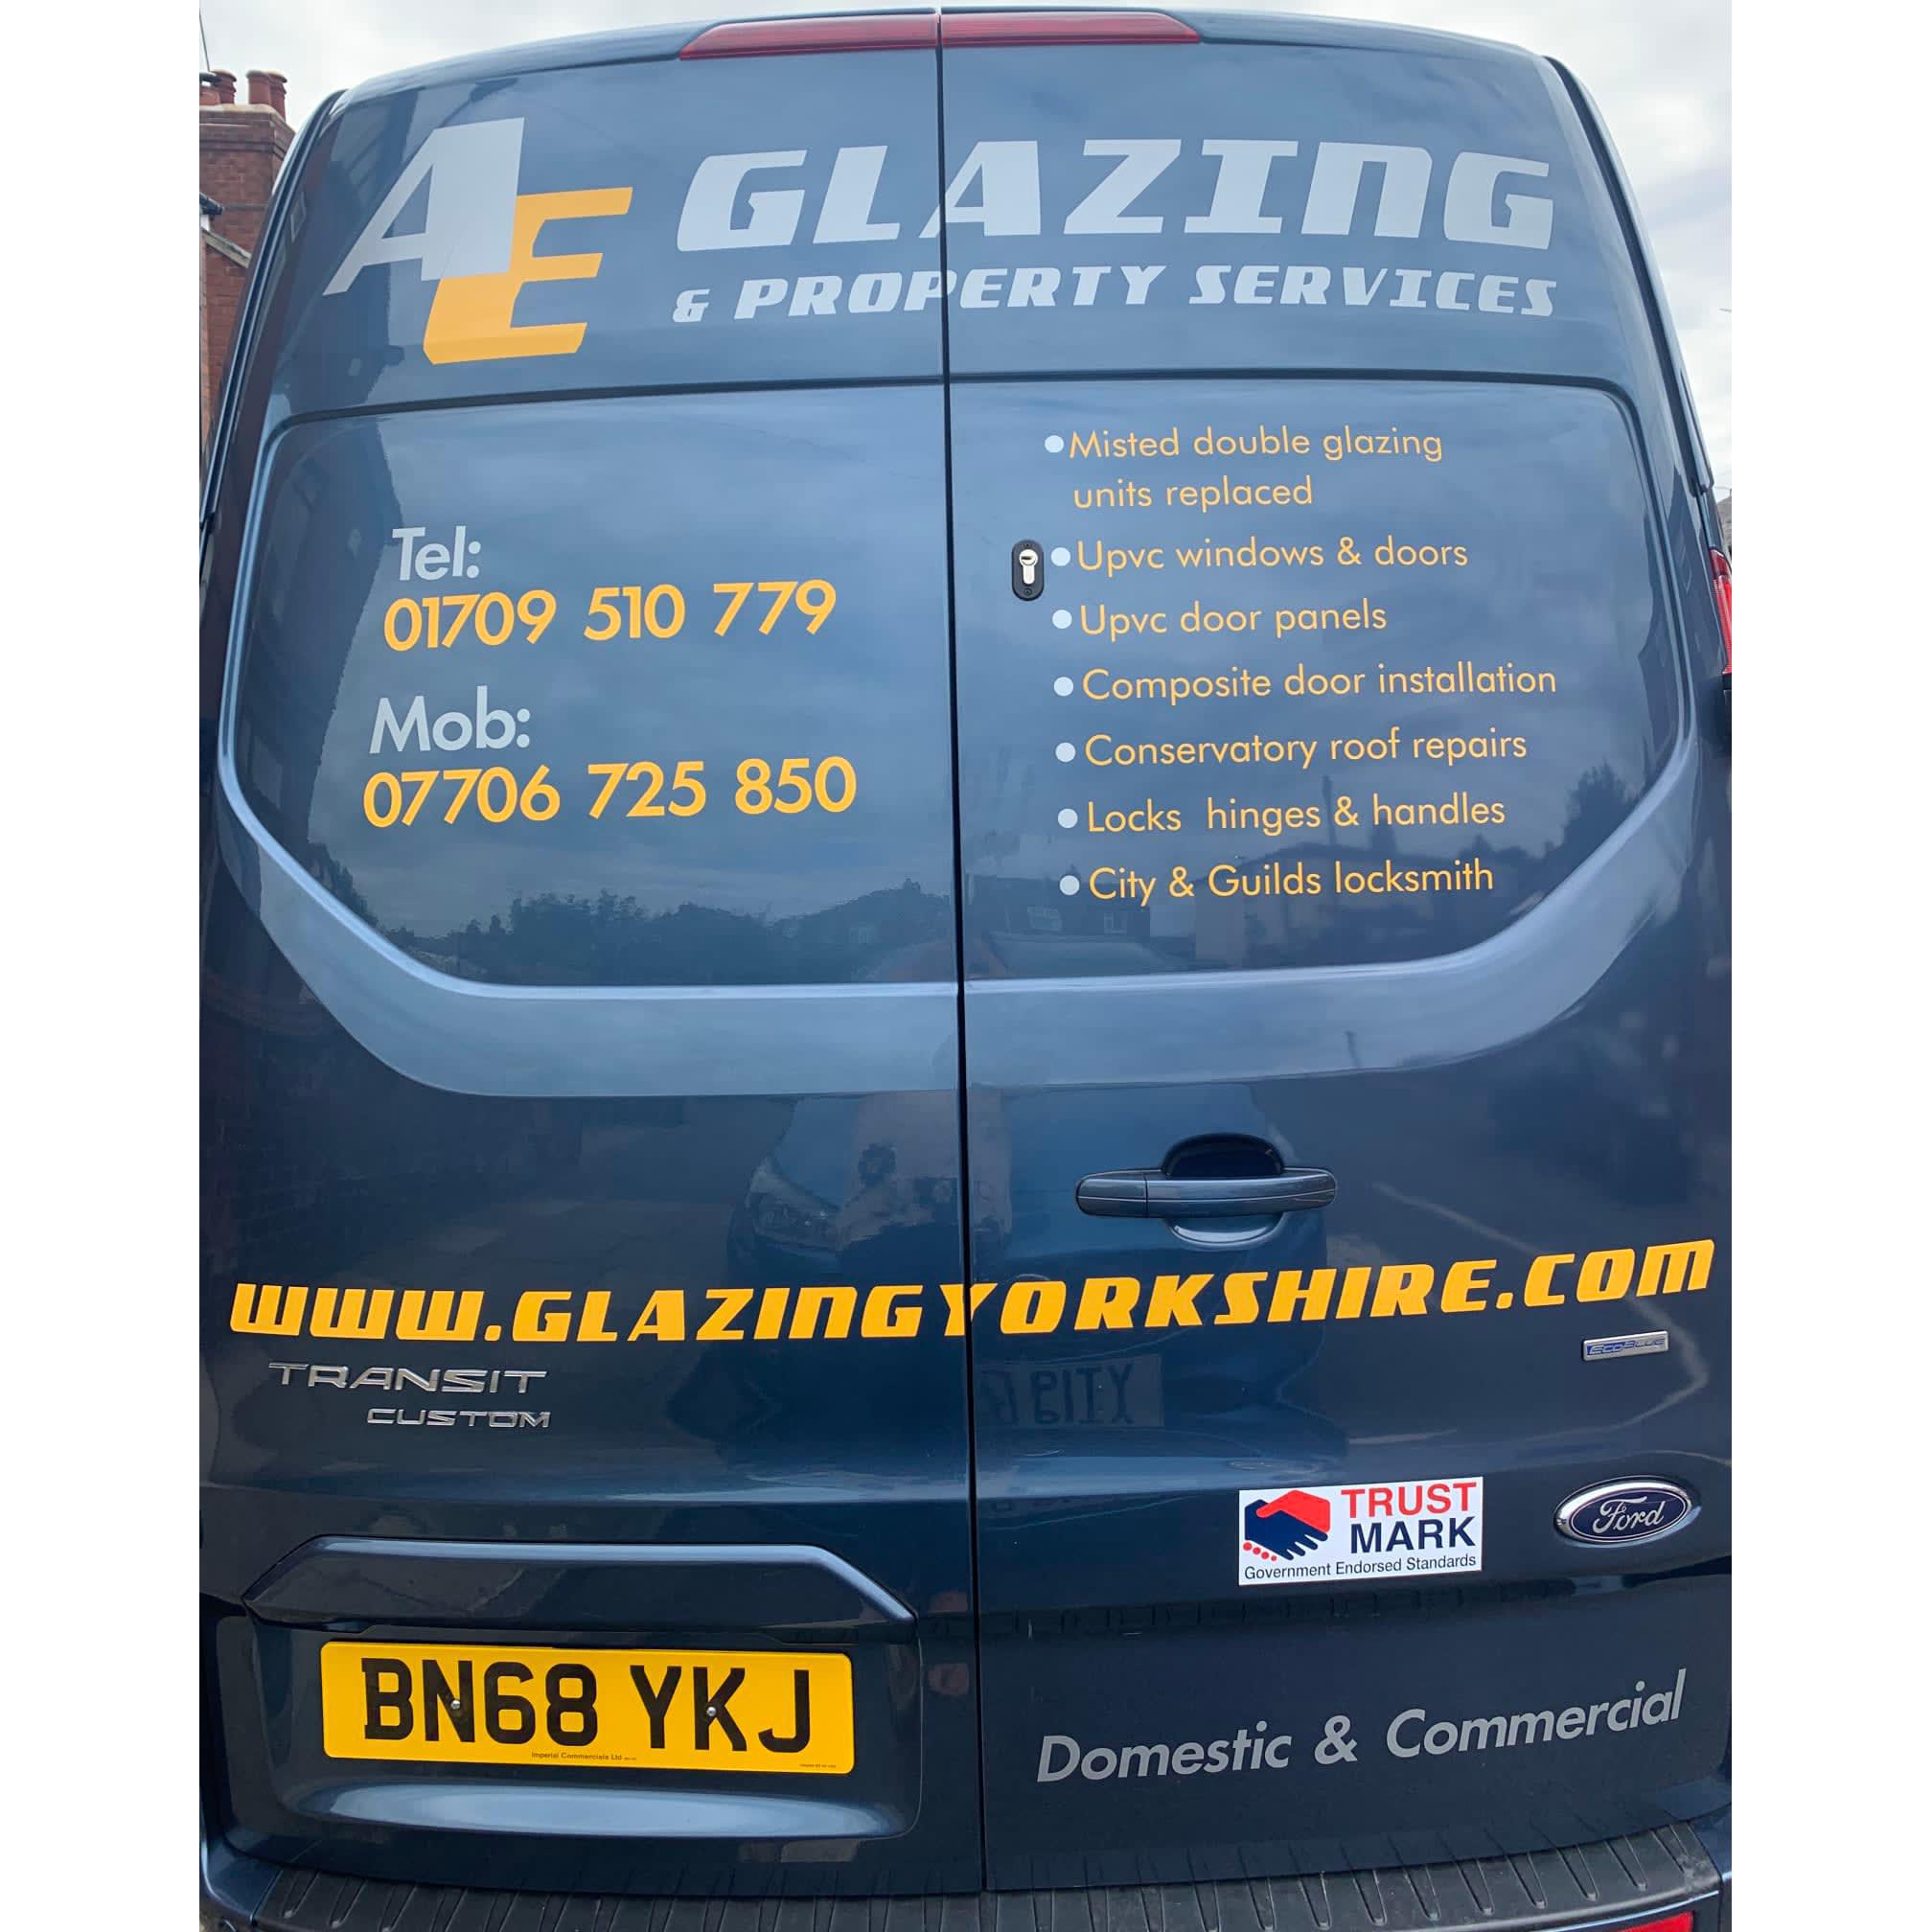 LOGO A & E Glazing & Property Services Rotherham 01709 510779